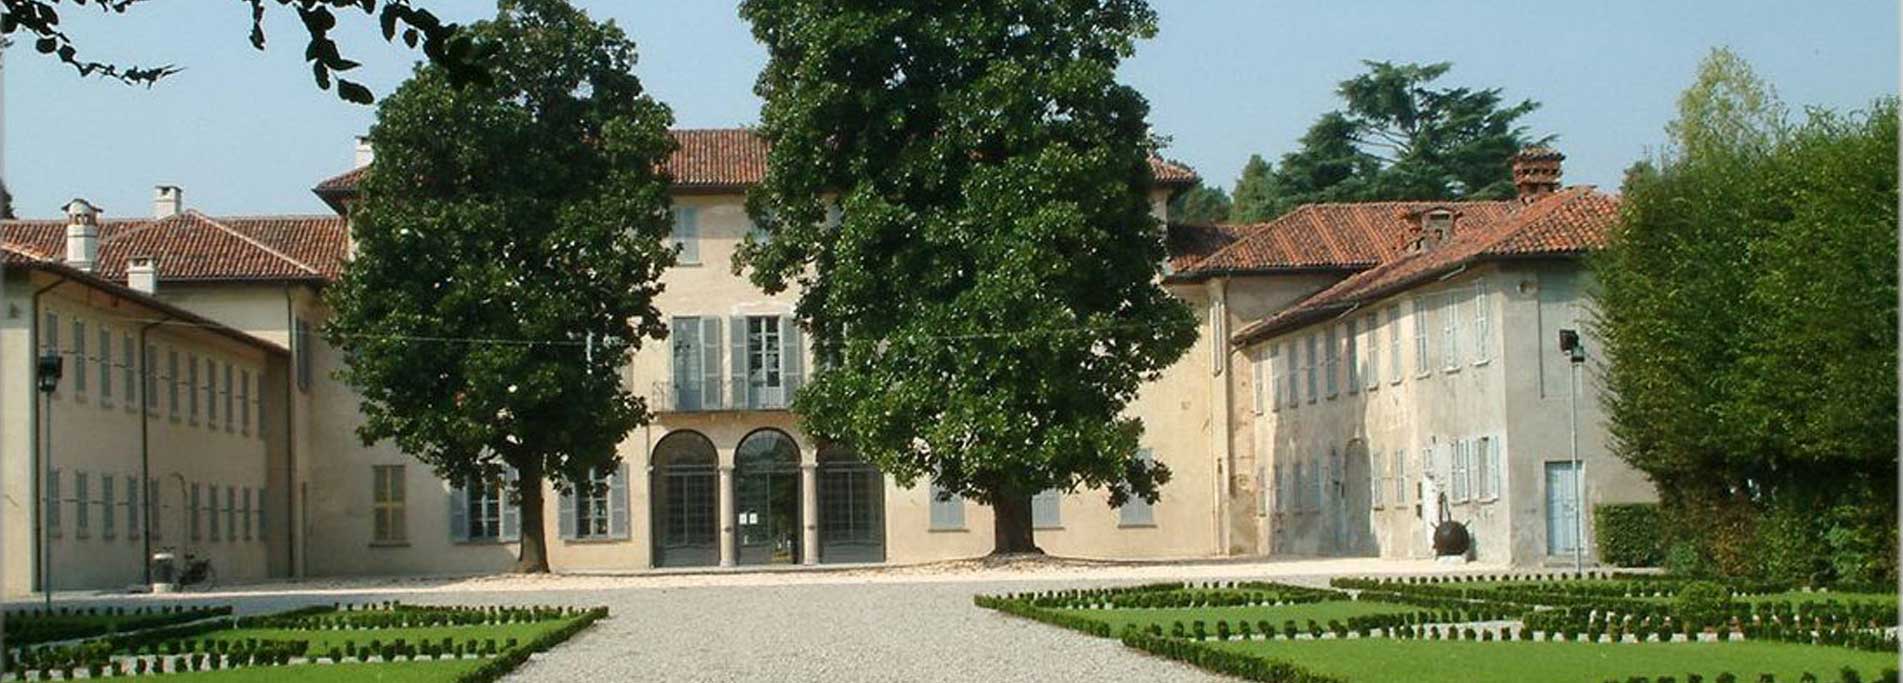 Villa Cicogna - Trecate